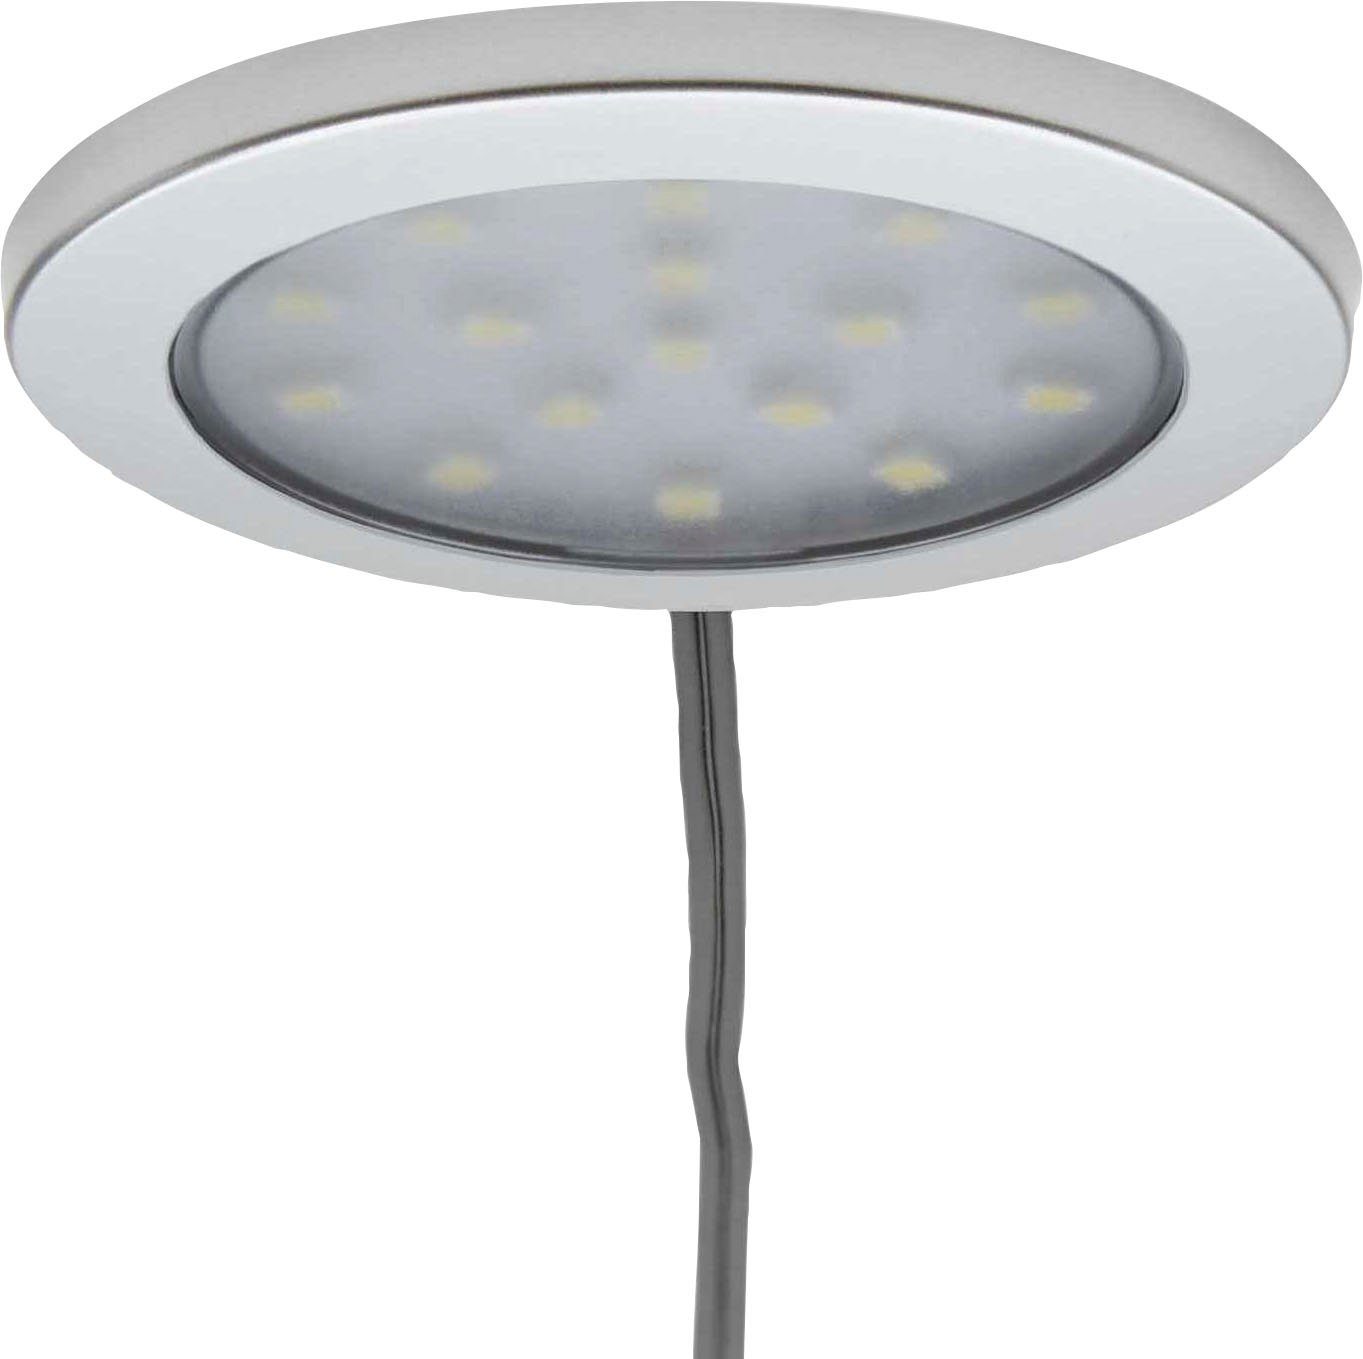 fif möbel Vitrine STELLA abschließbar silberfarben LED-Beleuchtung, Weiß, 2-türig, Spiegelrückwand, Silber 